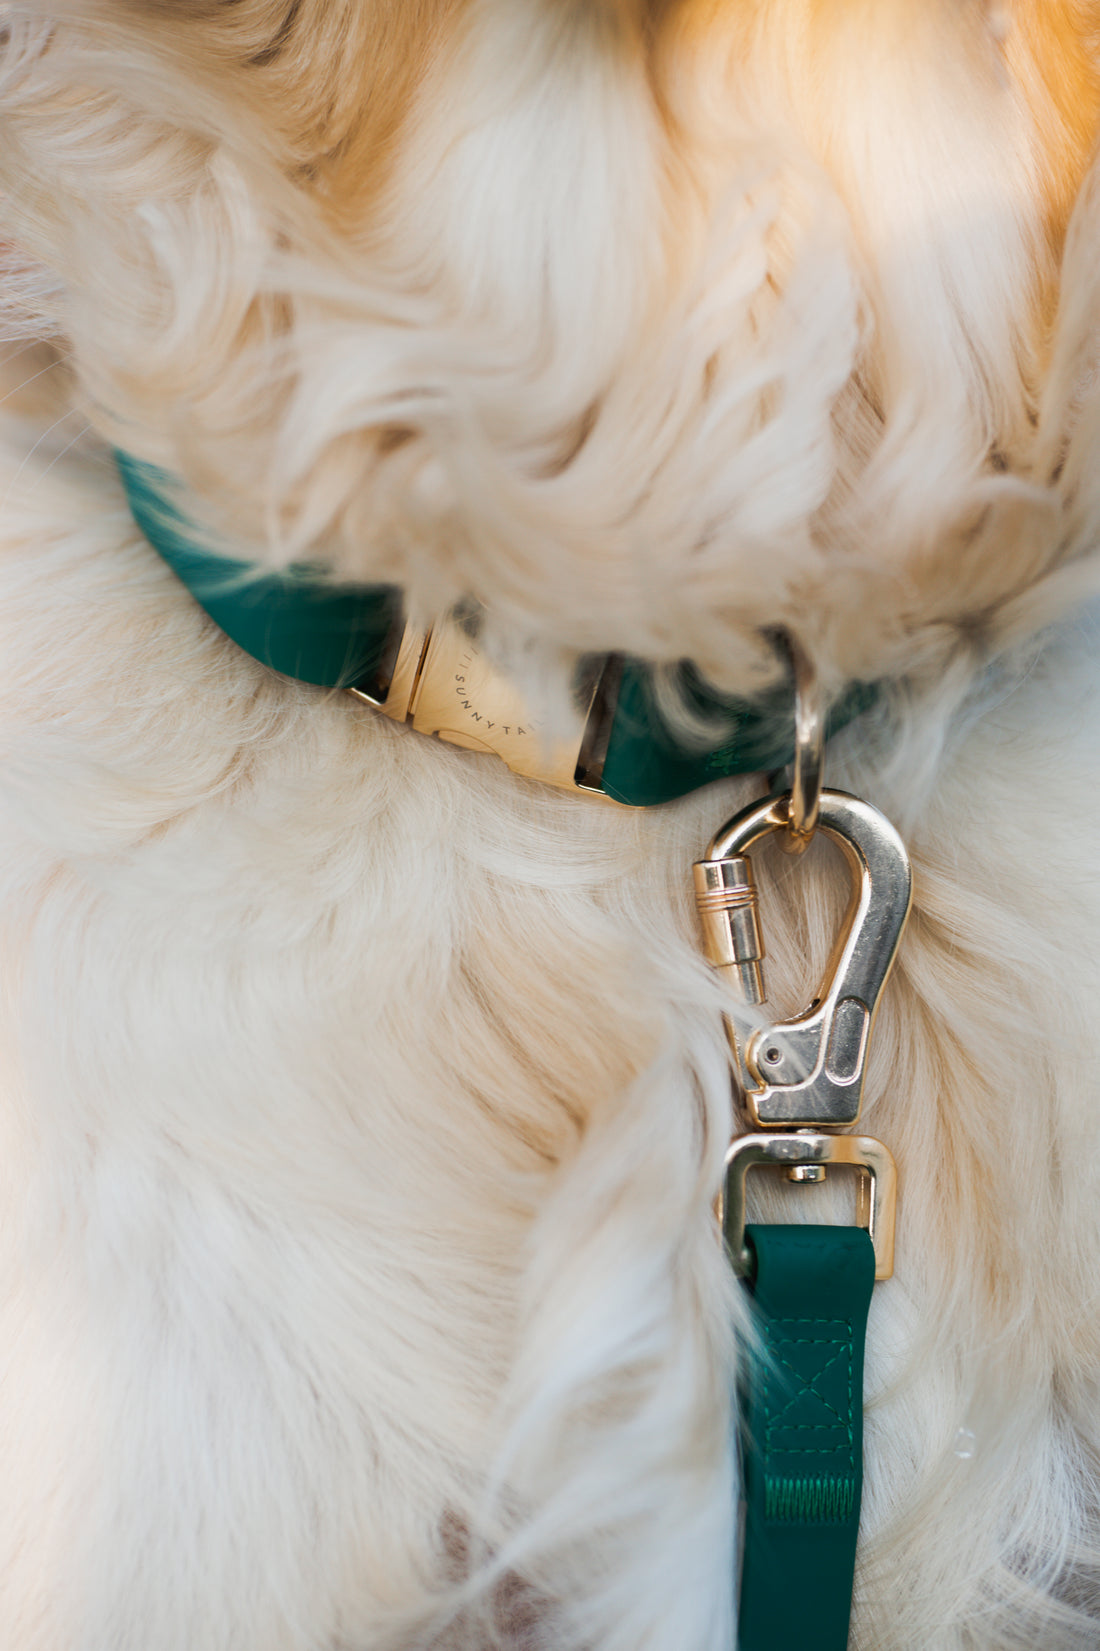 Wholesale High Quality Pet Dog Collar Metal Hardware Gold Side